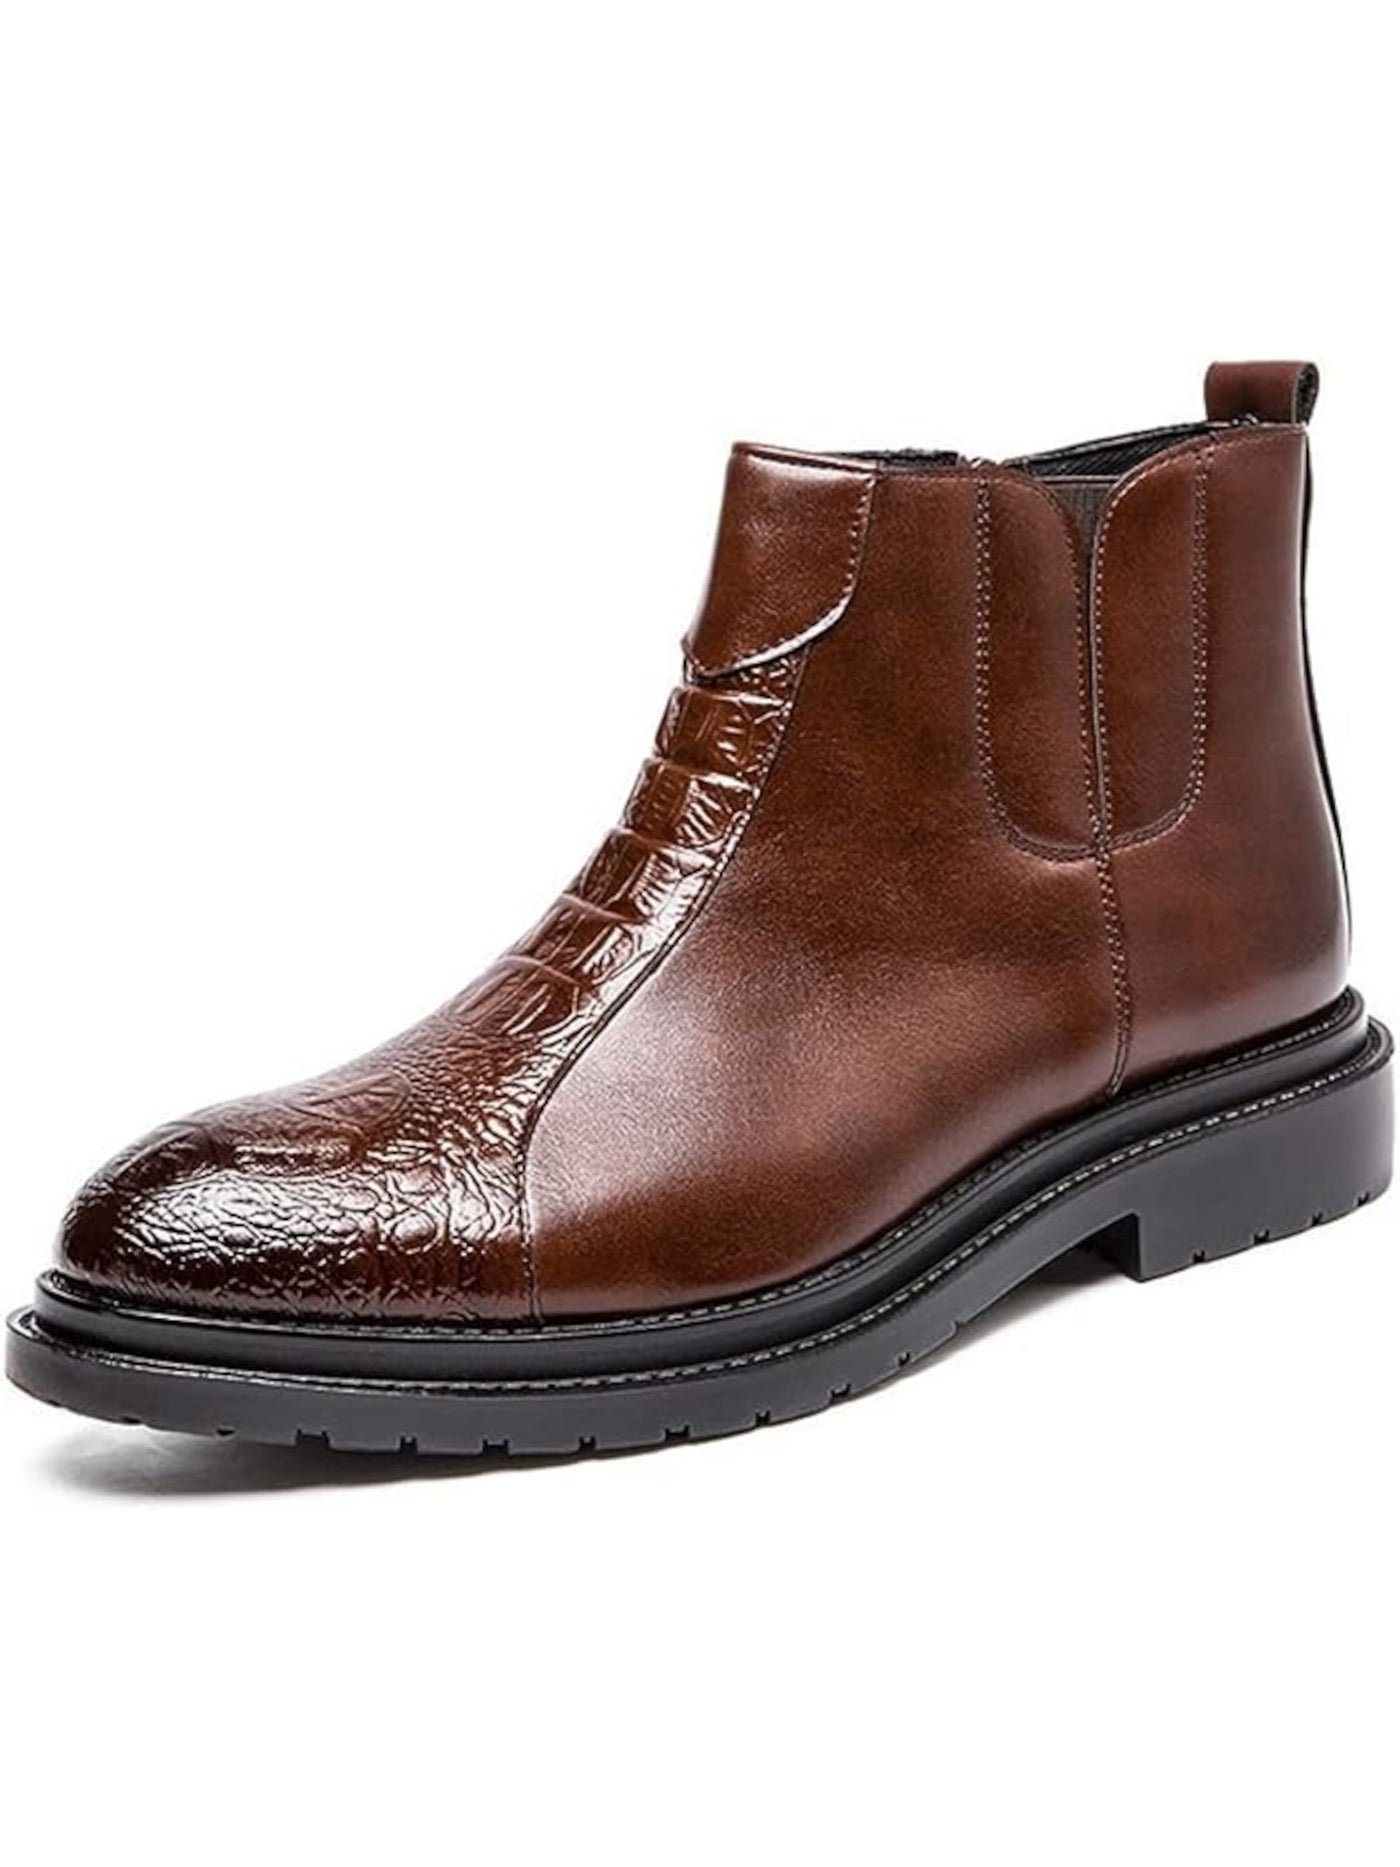 BOBBI&BRICKA Mens Brown Crocodile Removable Insole Comfort Round Toe Block Heel Zip-Up Boots Shoes 45